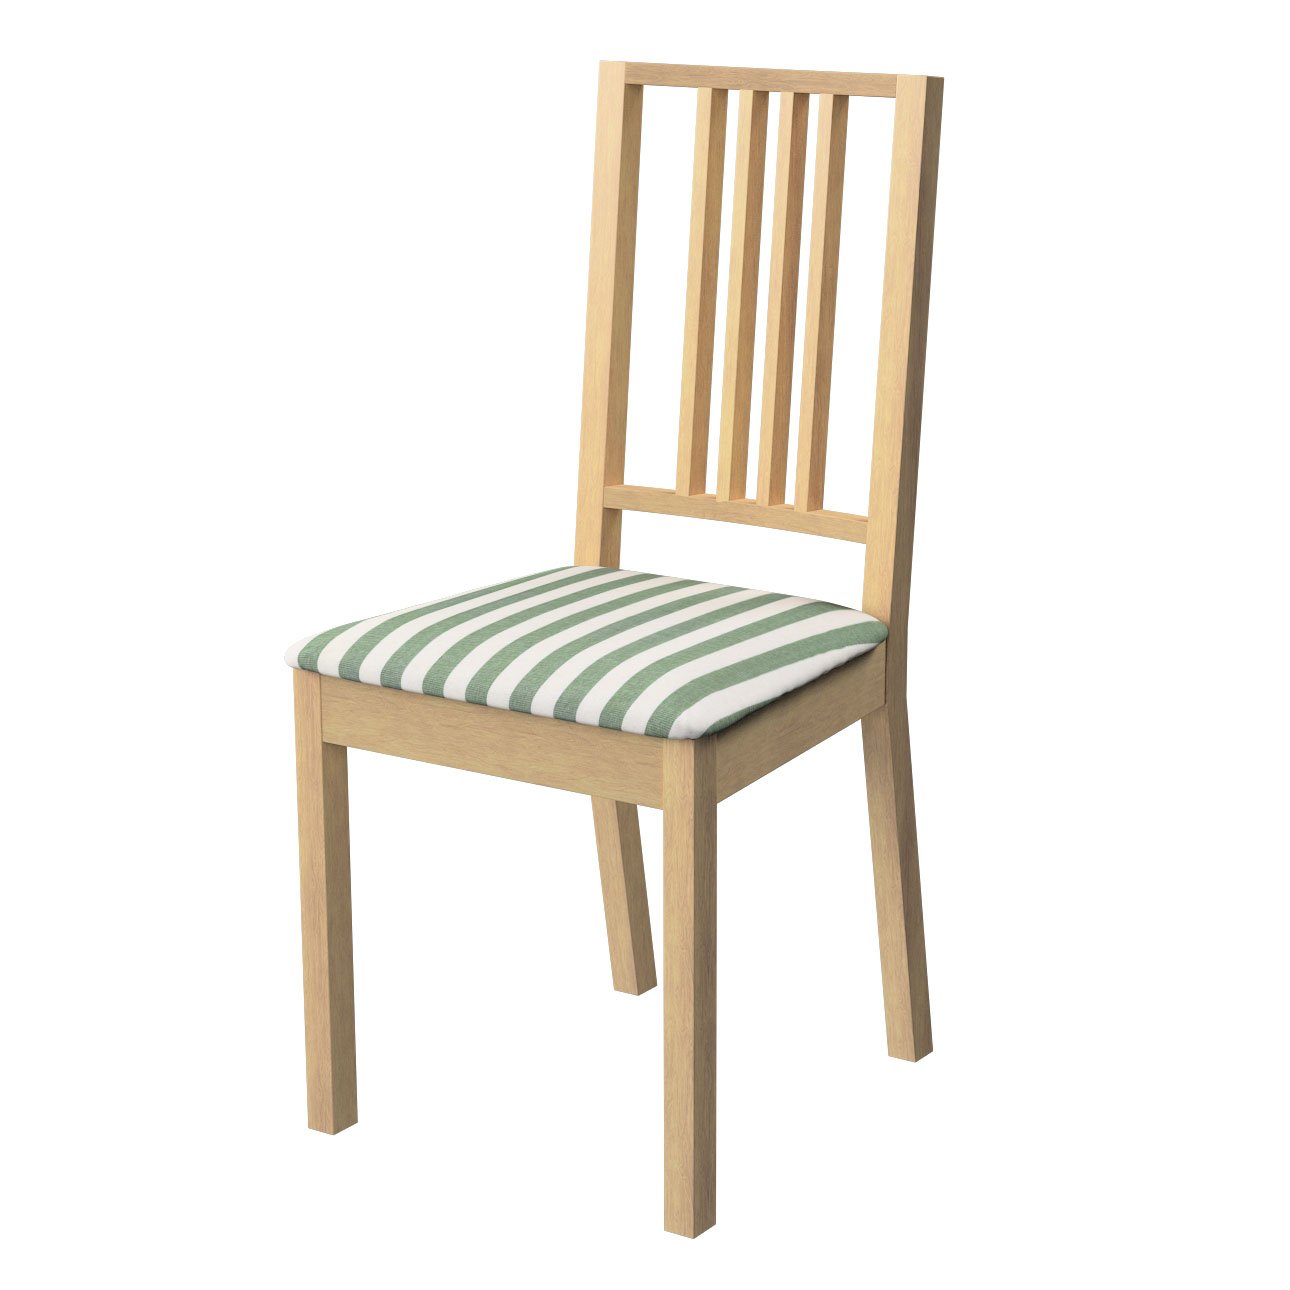 Dekoria Potah na sedák židle Börje, zelená a bílá, potah sedák židle Börje, Quadro, 144-35